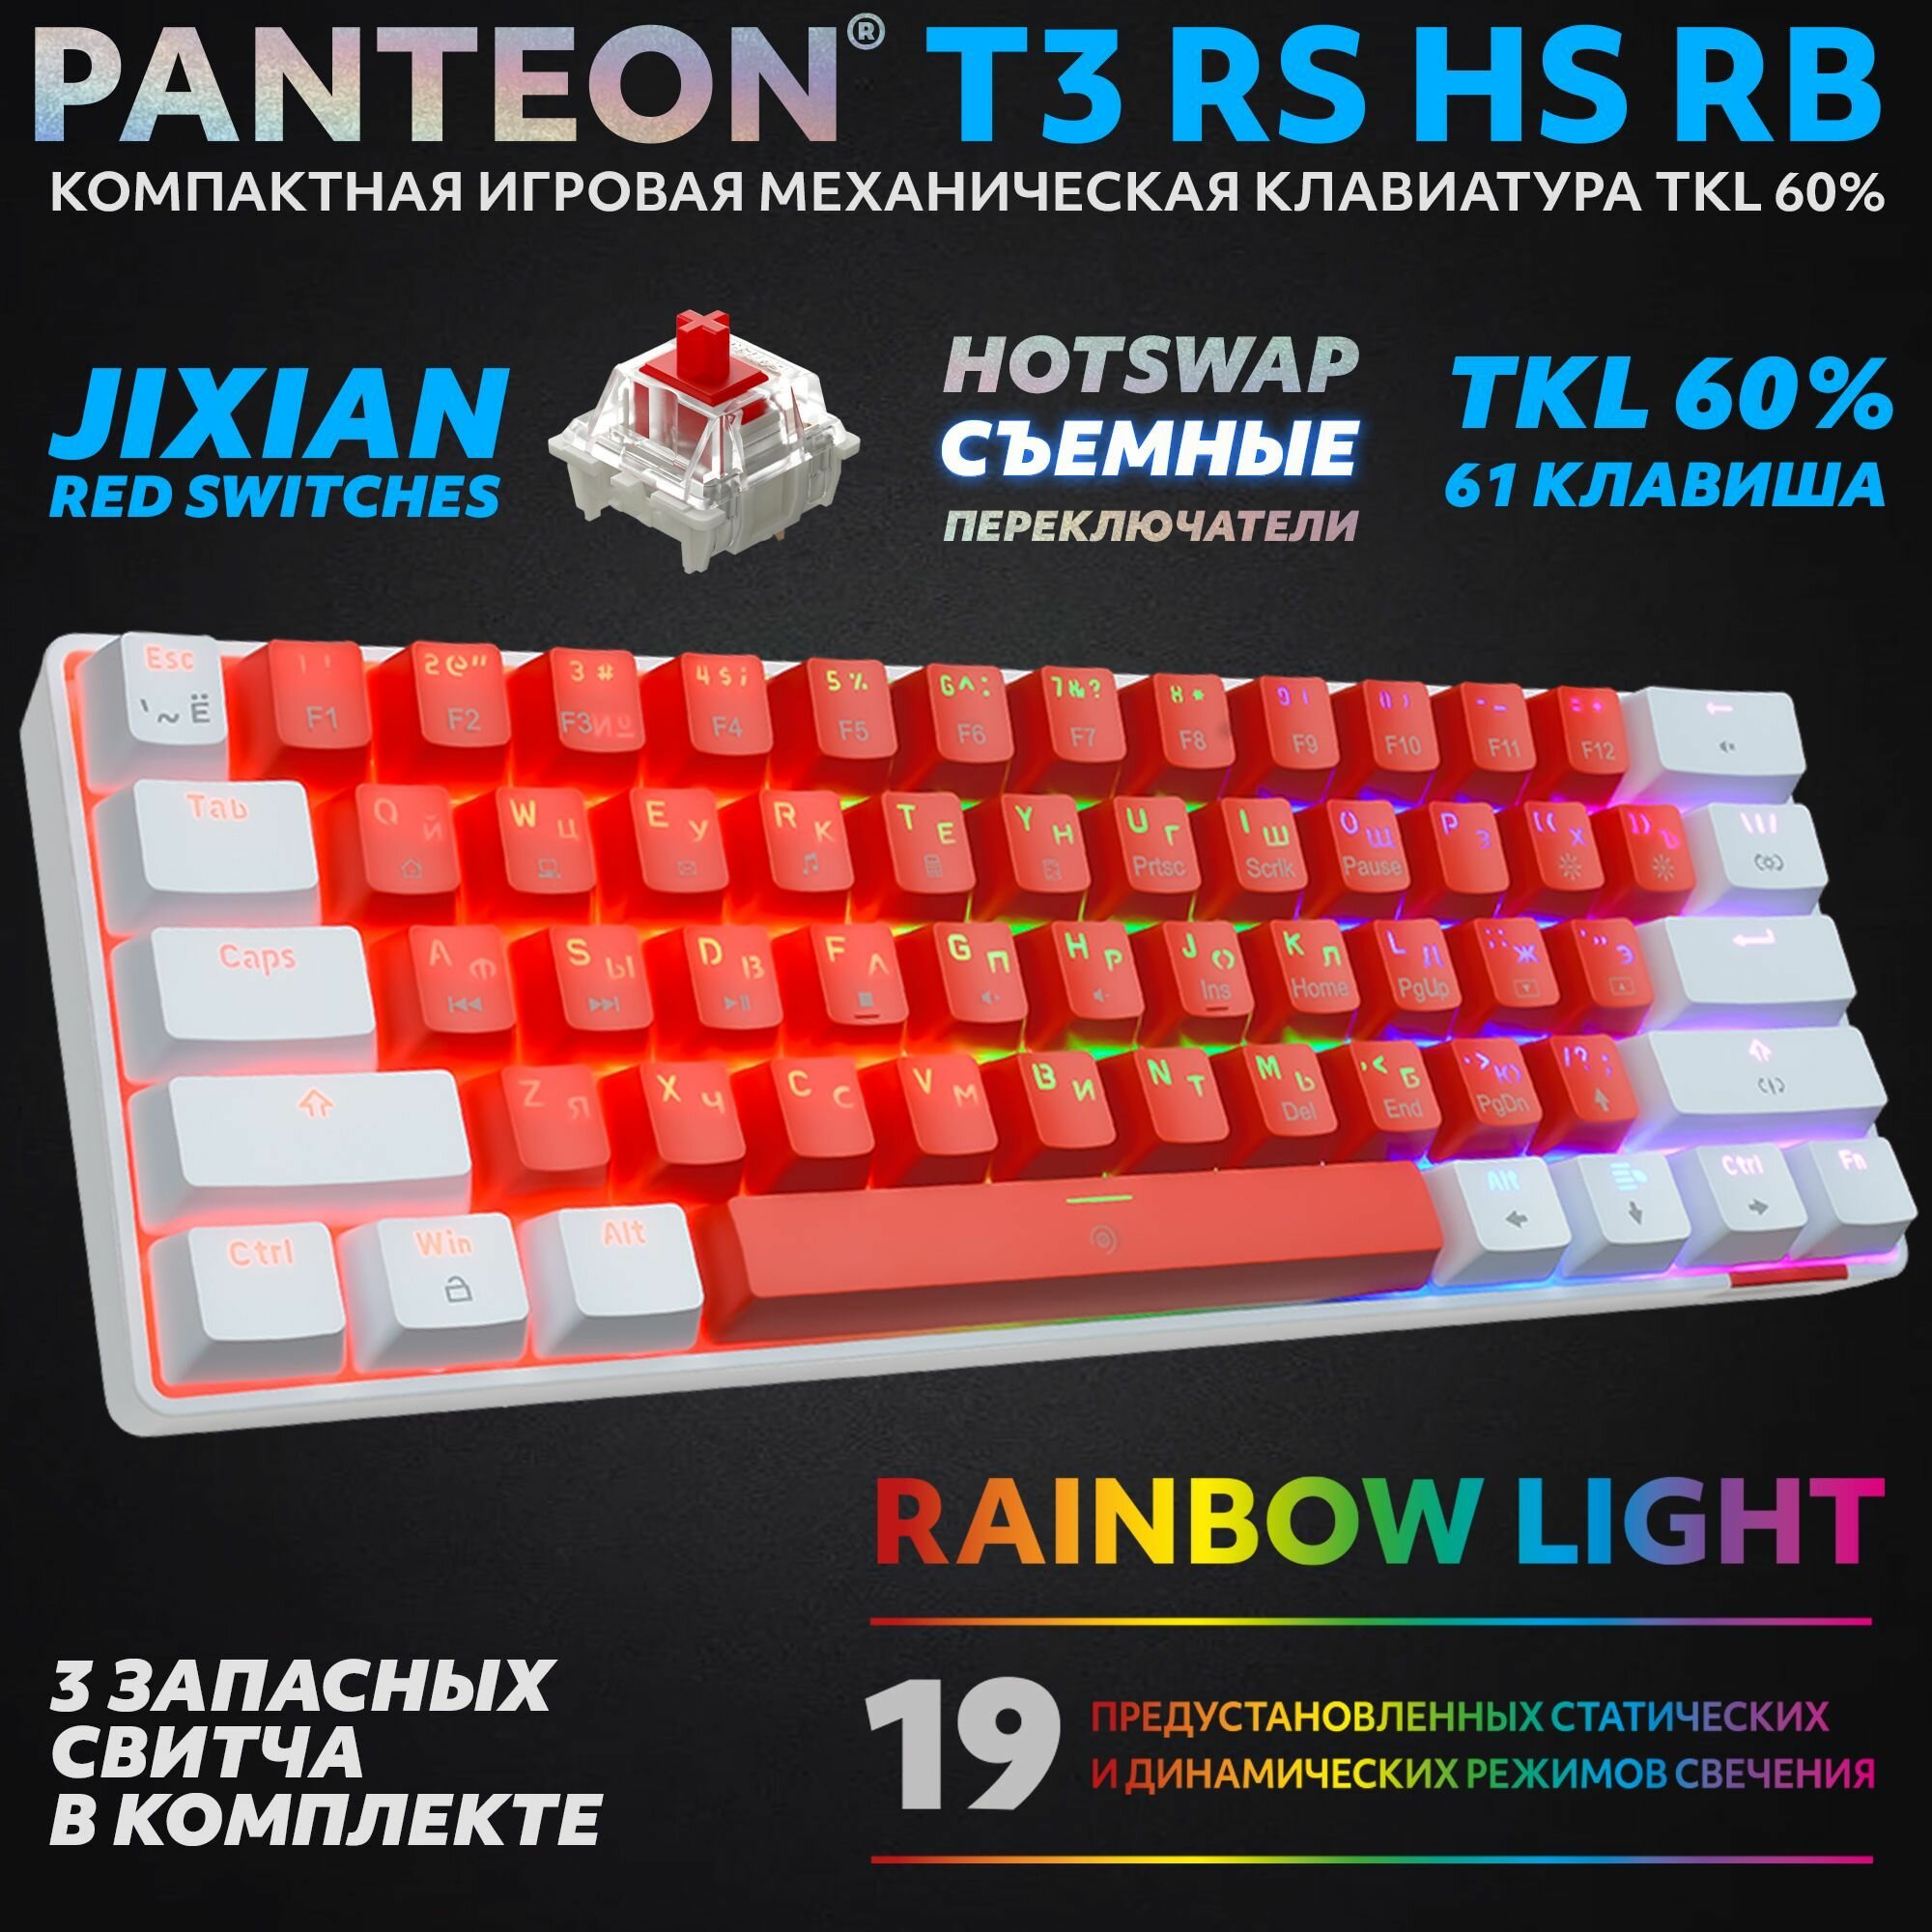 PANTEON T3 RS HS RB Red-White (43) Механическая клавиатура (TKL 60% подсветка LED RAINBOW Jixian Red 61 кл HotSwap USB) цвет: красный-белый (43)